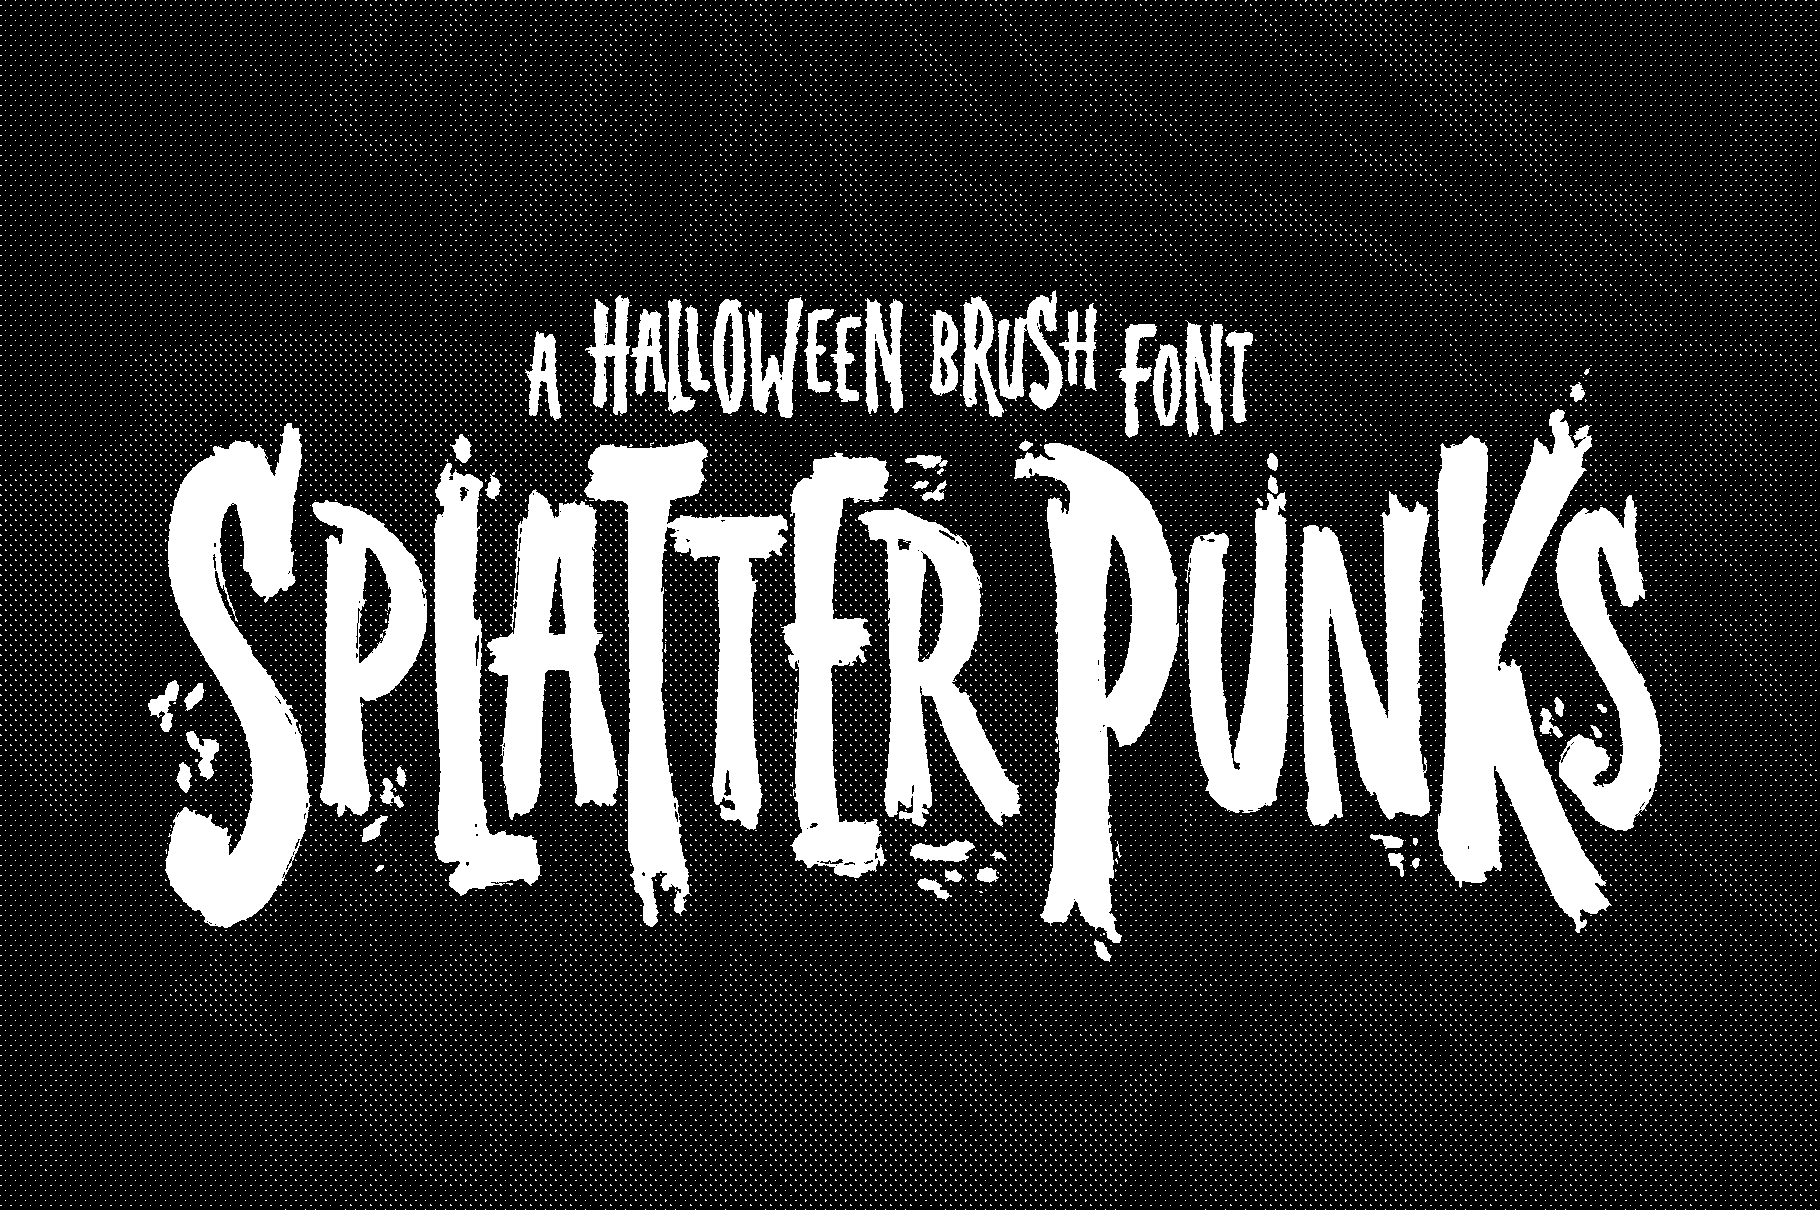 Splatterpunks - A Halloween Brush Font by Wingsart Studio